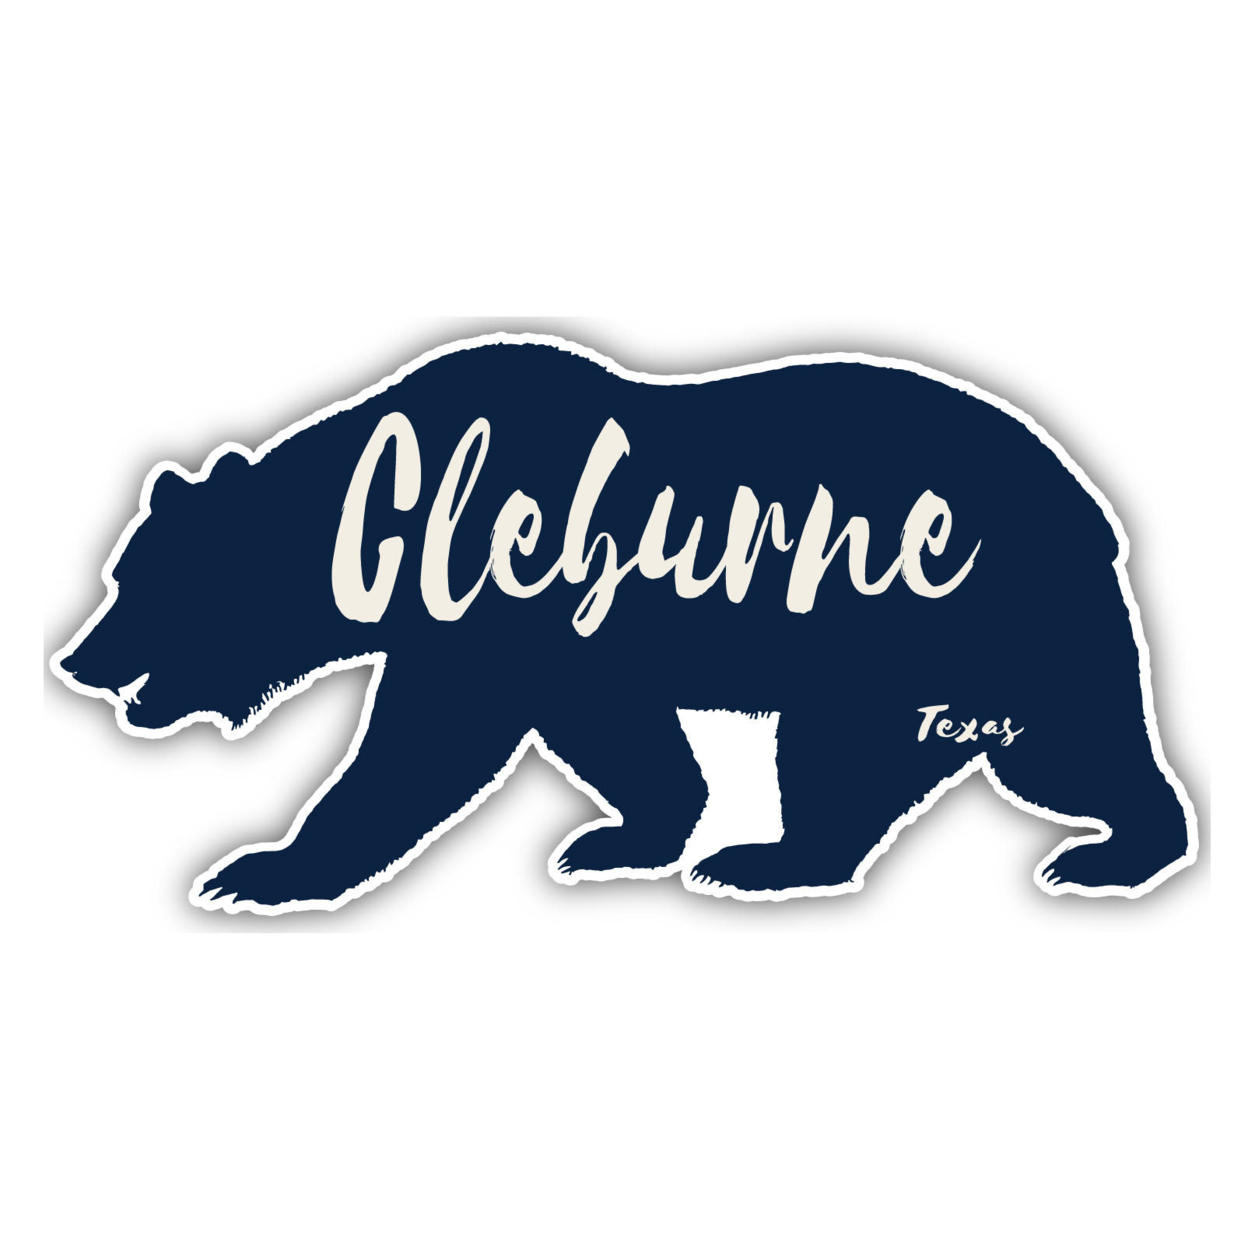 Cleburne Texas Souvenir Decorative Stickers (Choose Theme And Size) - Single Unit, 8-Inch, Bear